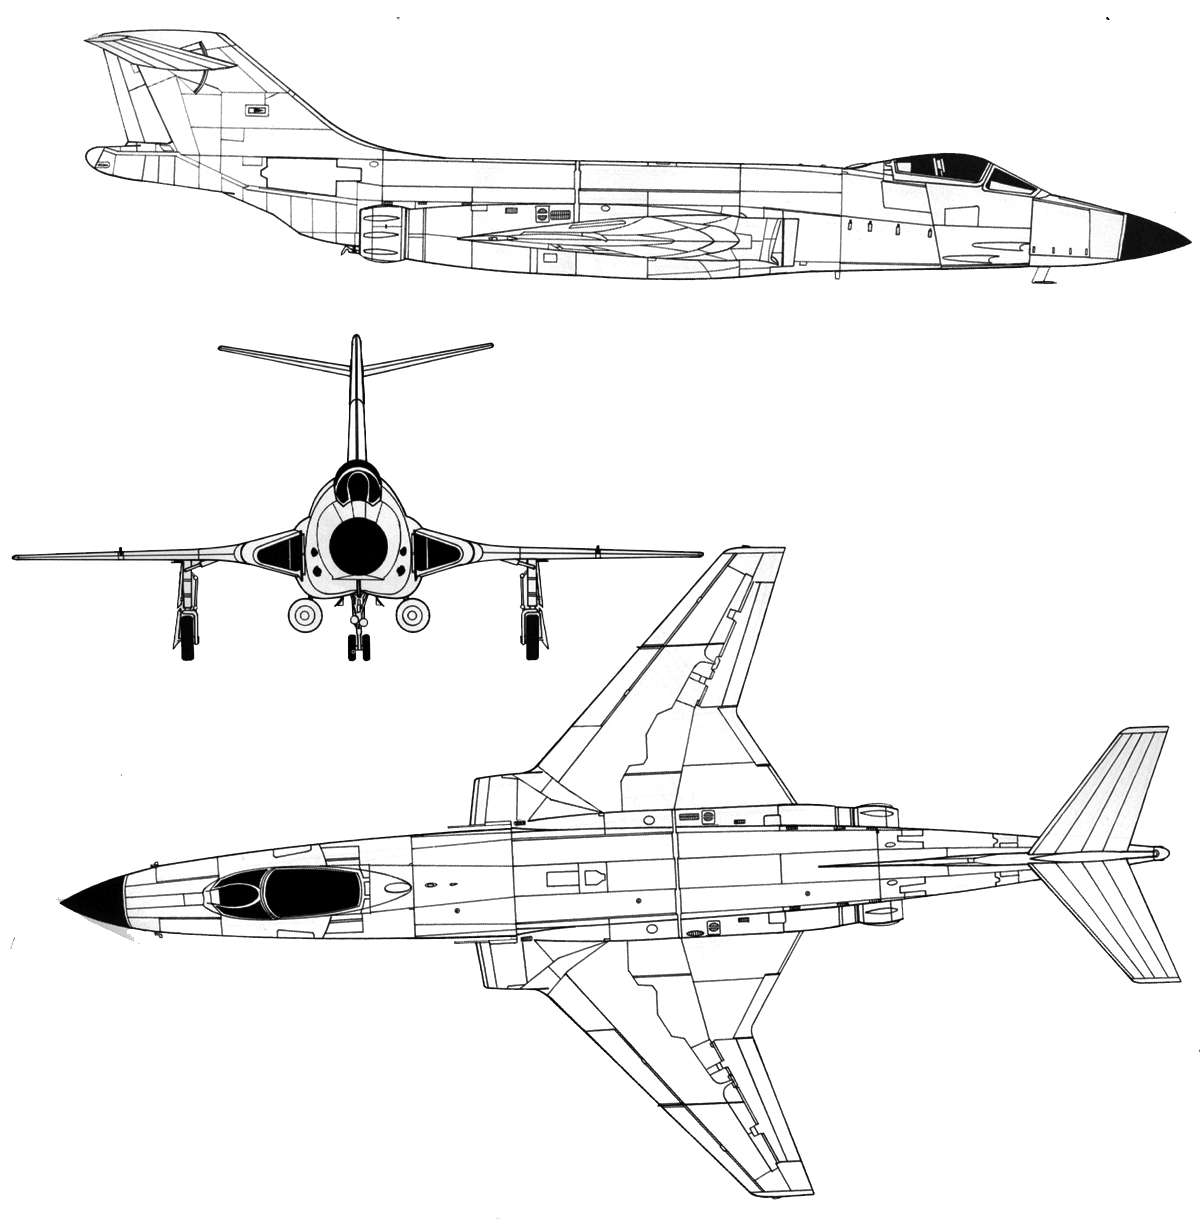 Mcdonnell F-101 Voodoo Blueprint - Download Free Blueprint For 3D Modeling